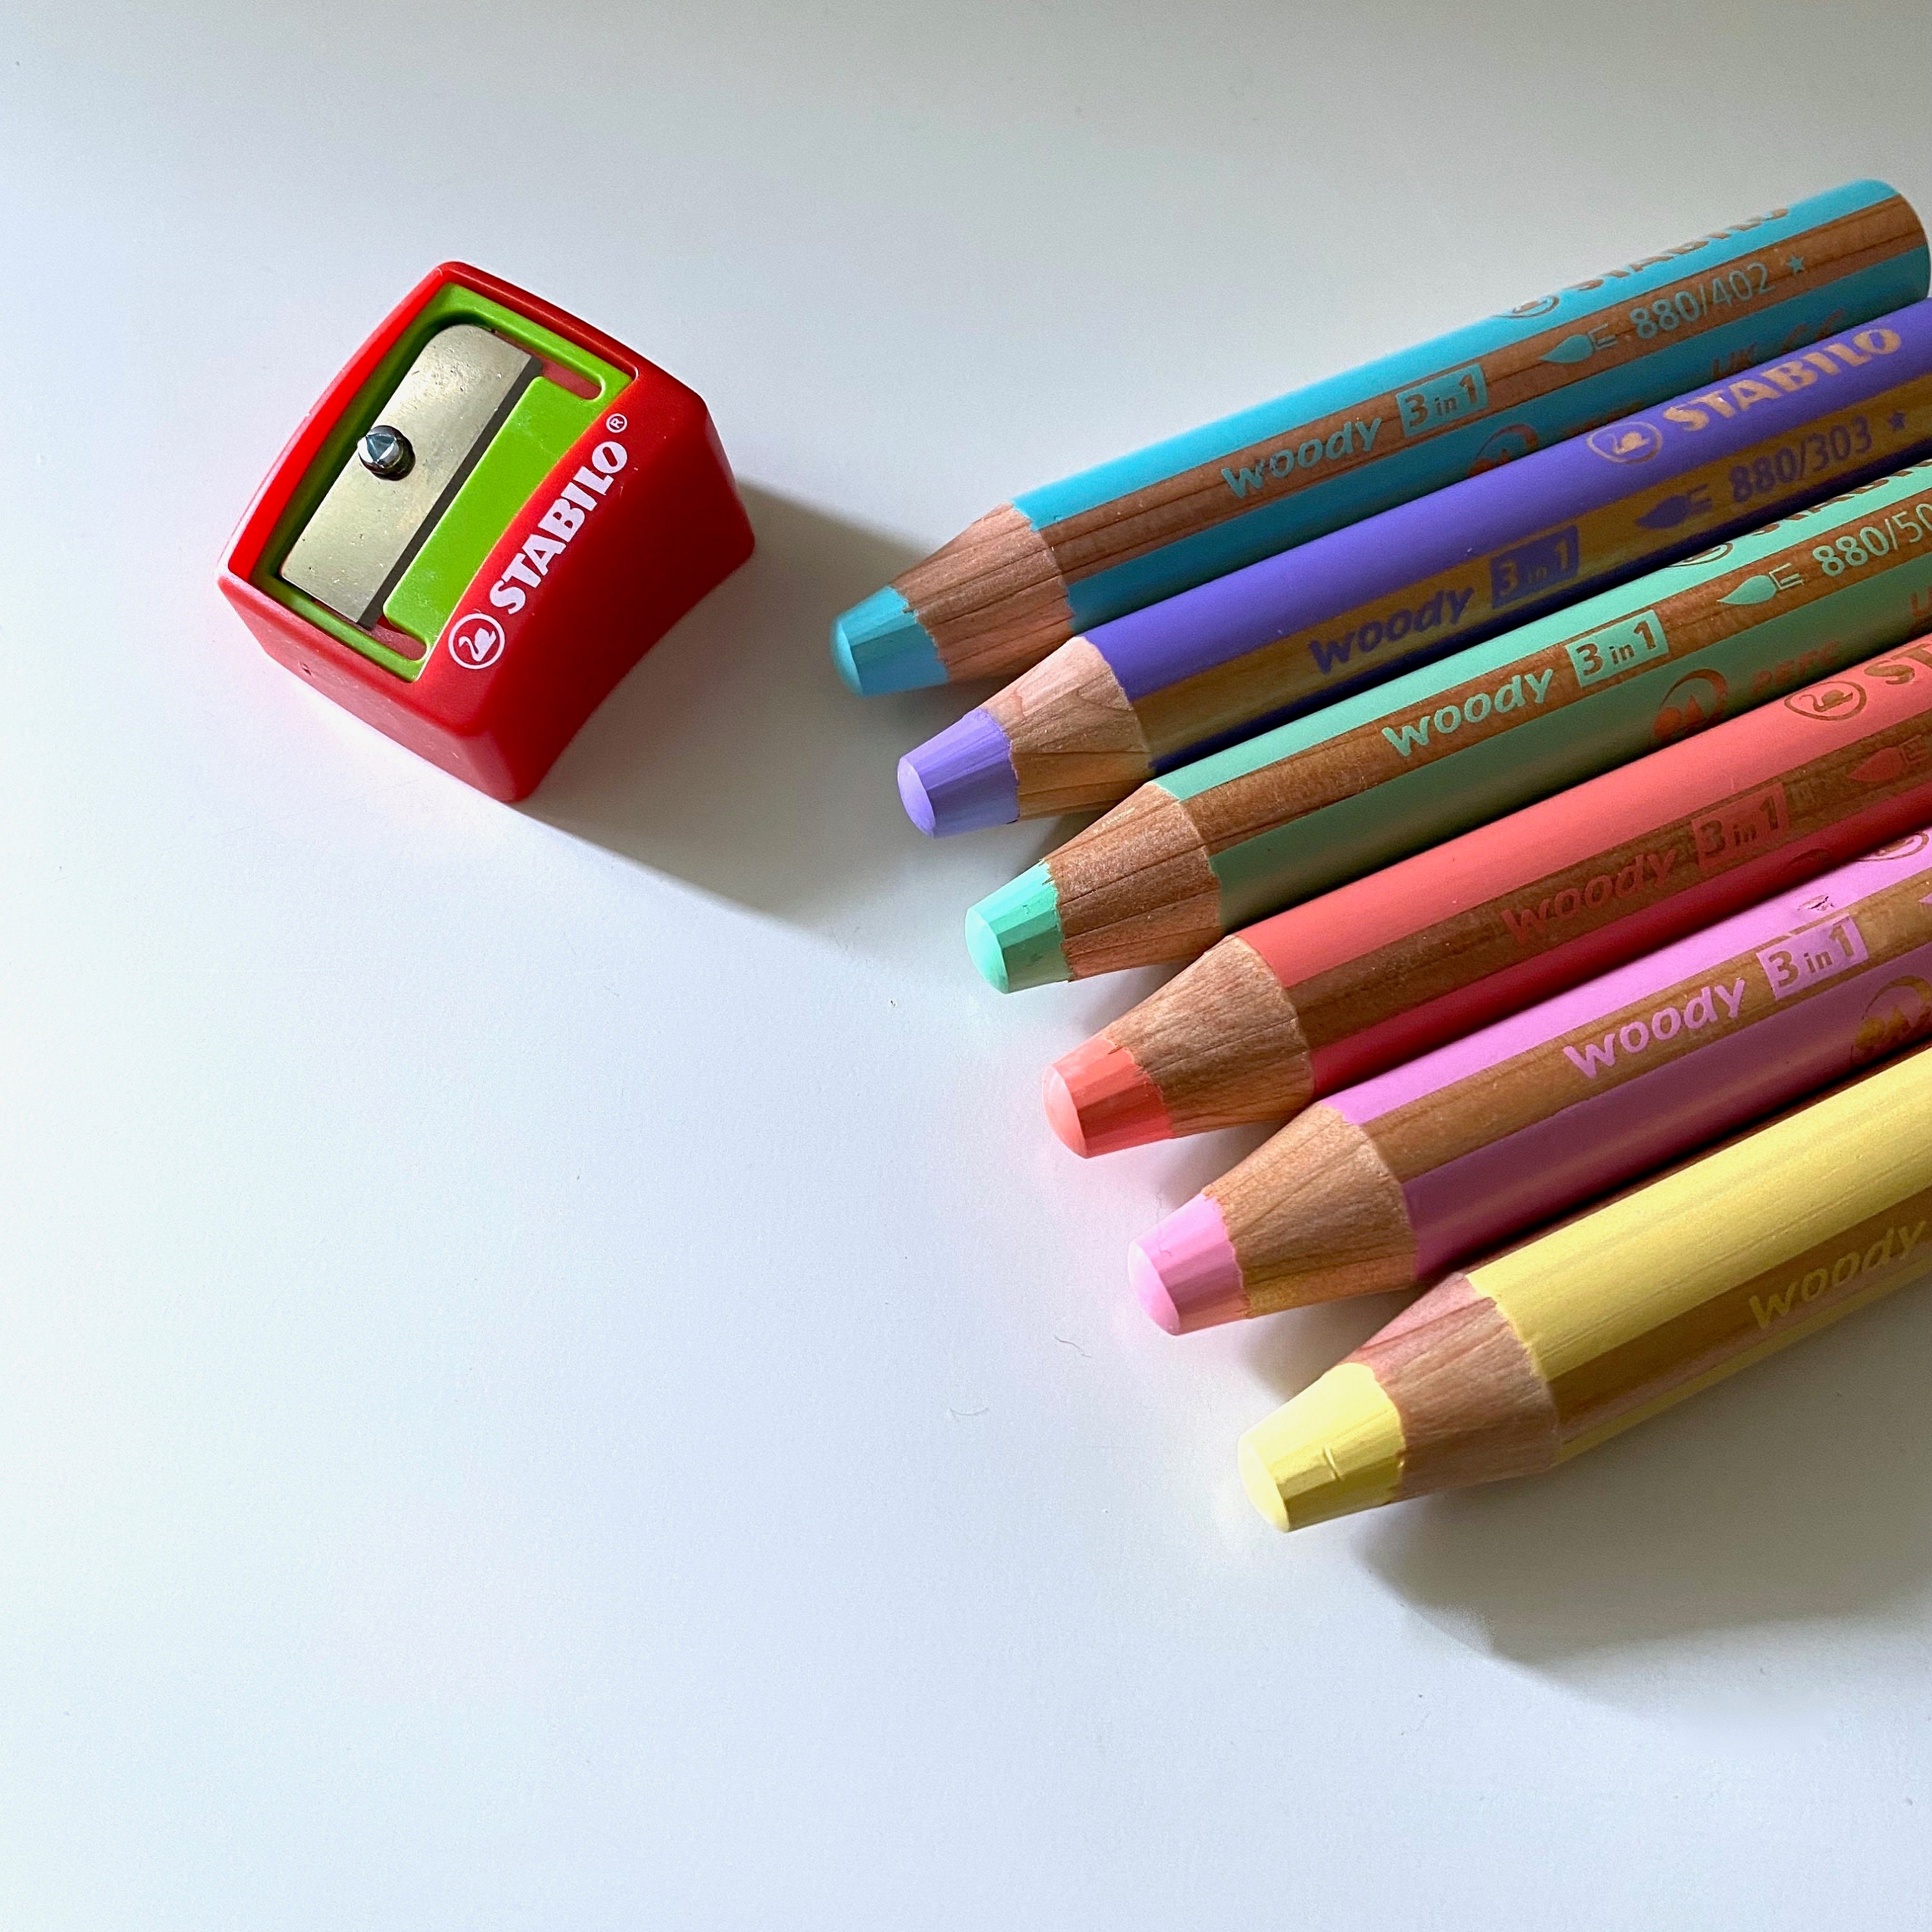 Stabilo Woody Pencils - Arty Set of 18 With Brush & Sharpener [880